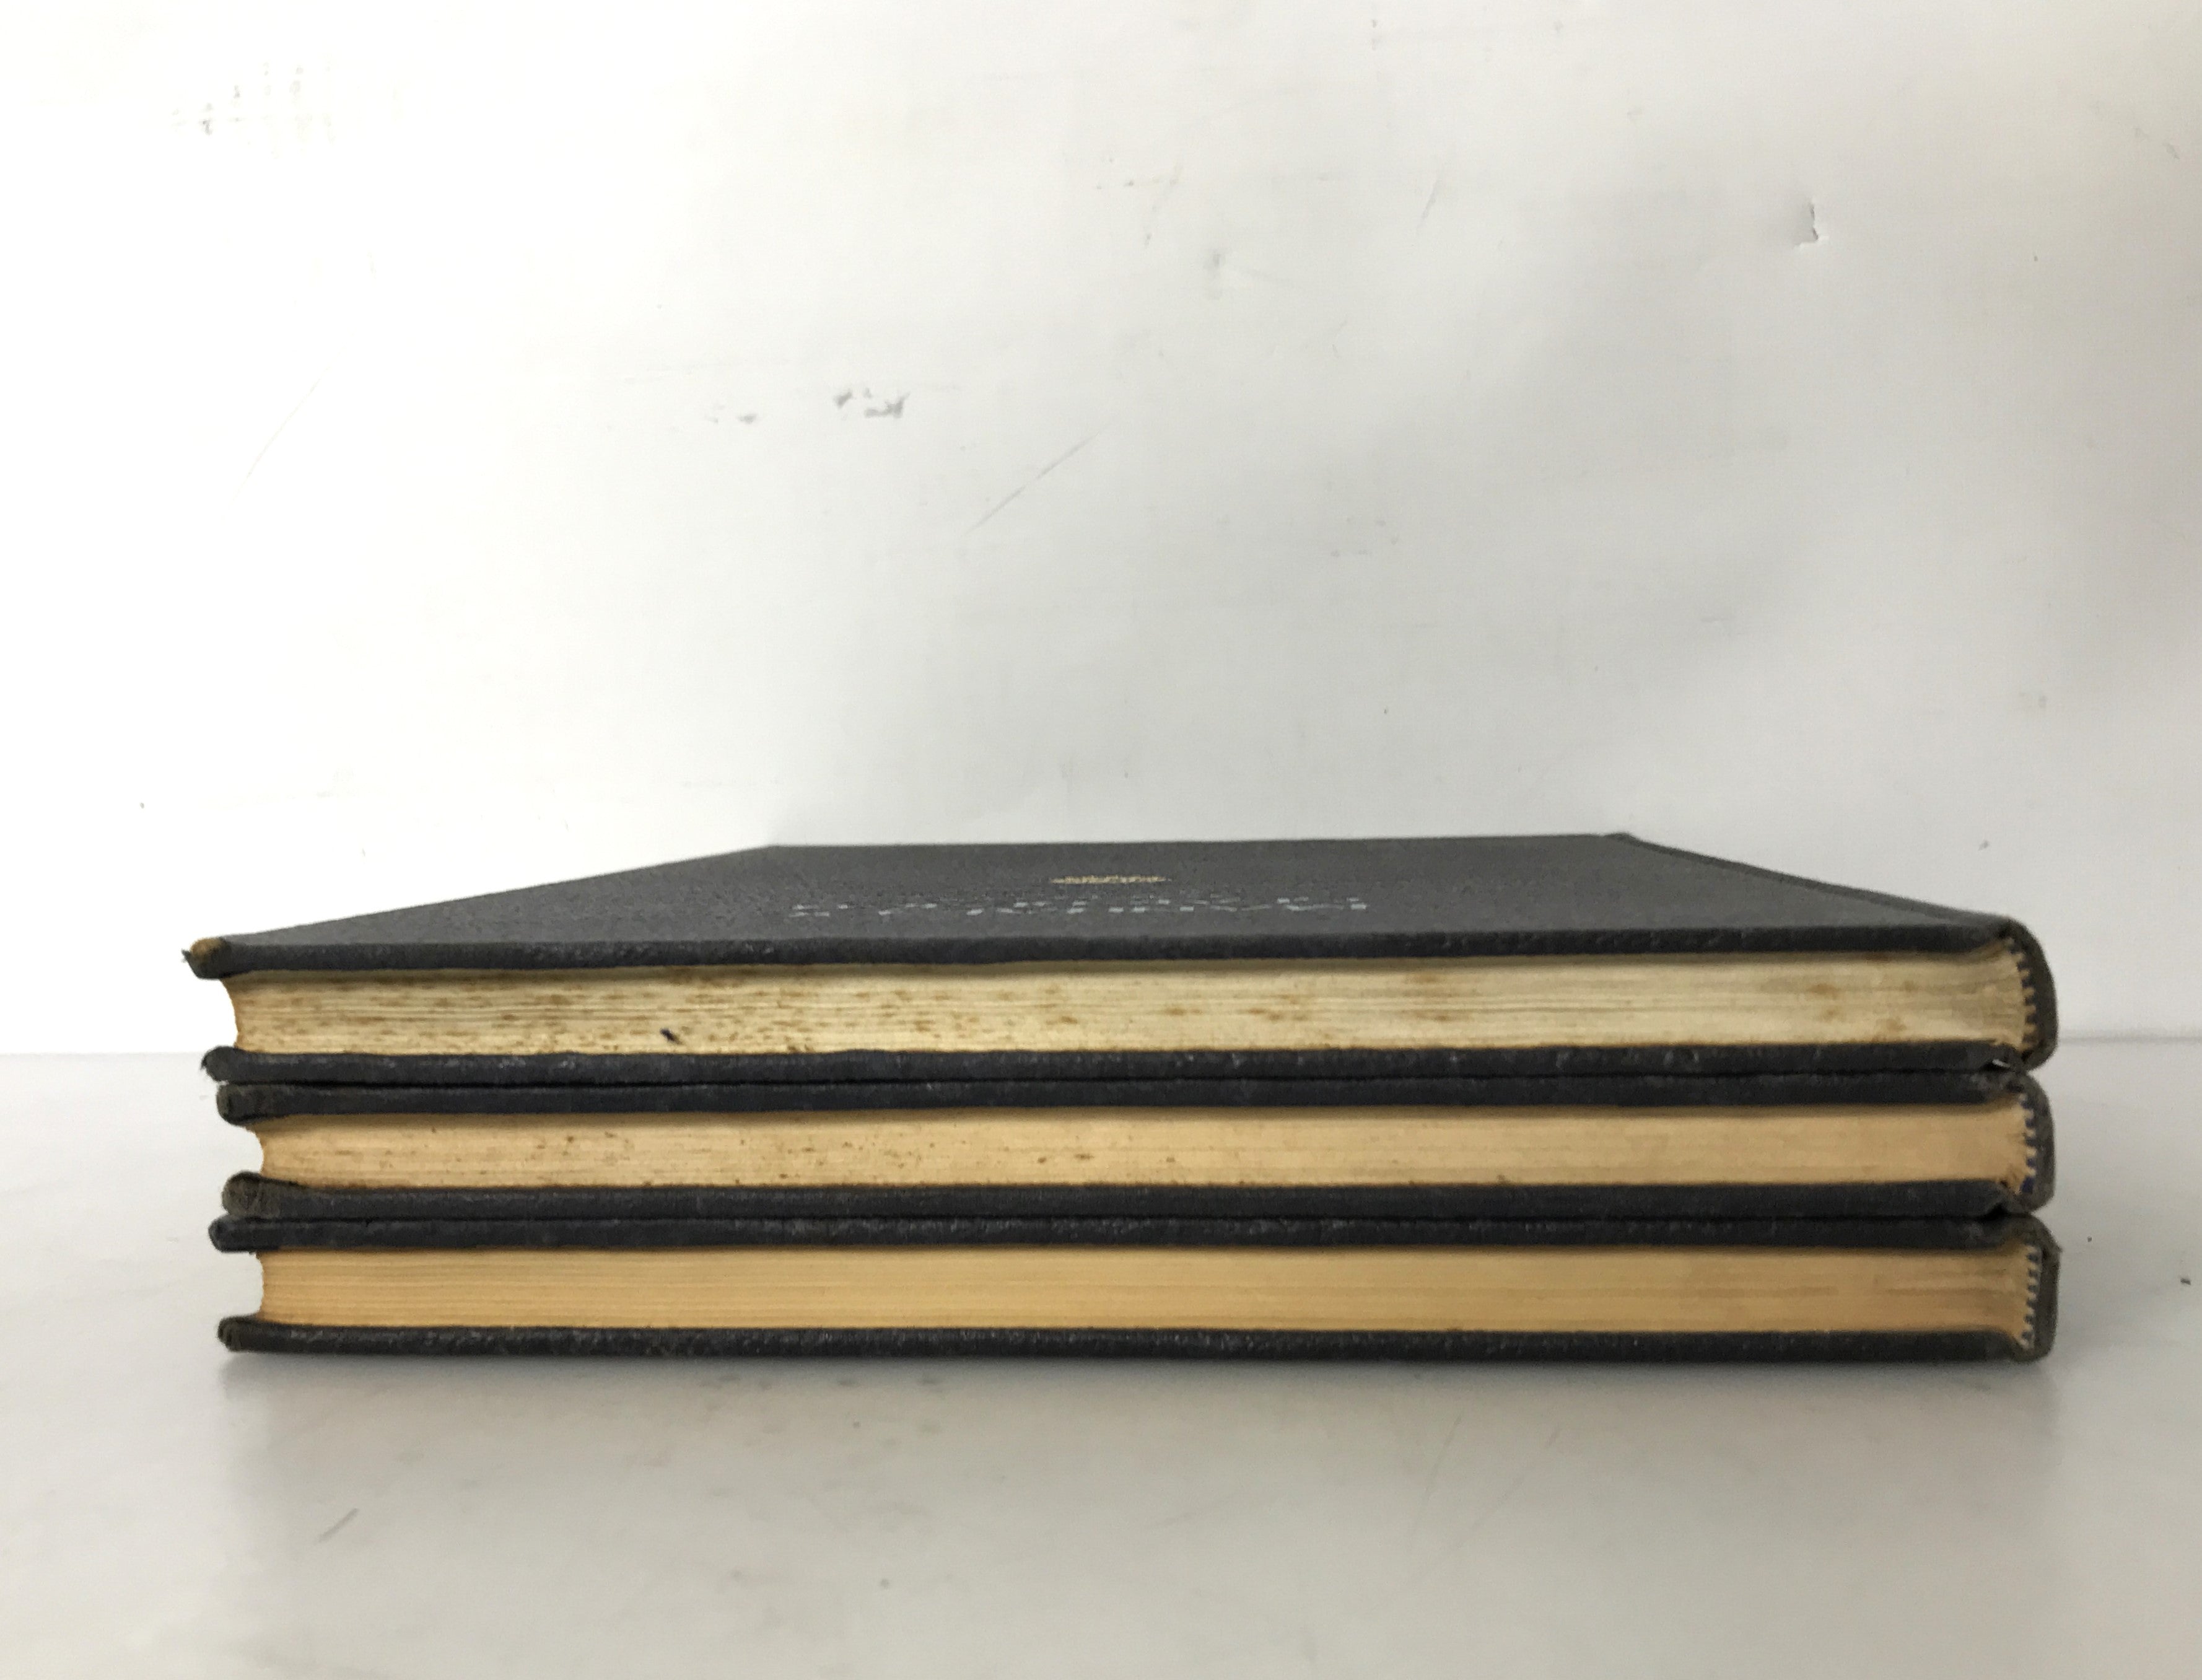 3 Vol Set Manual of Gear Design by Earle Buckingham 1935-1955 HC